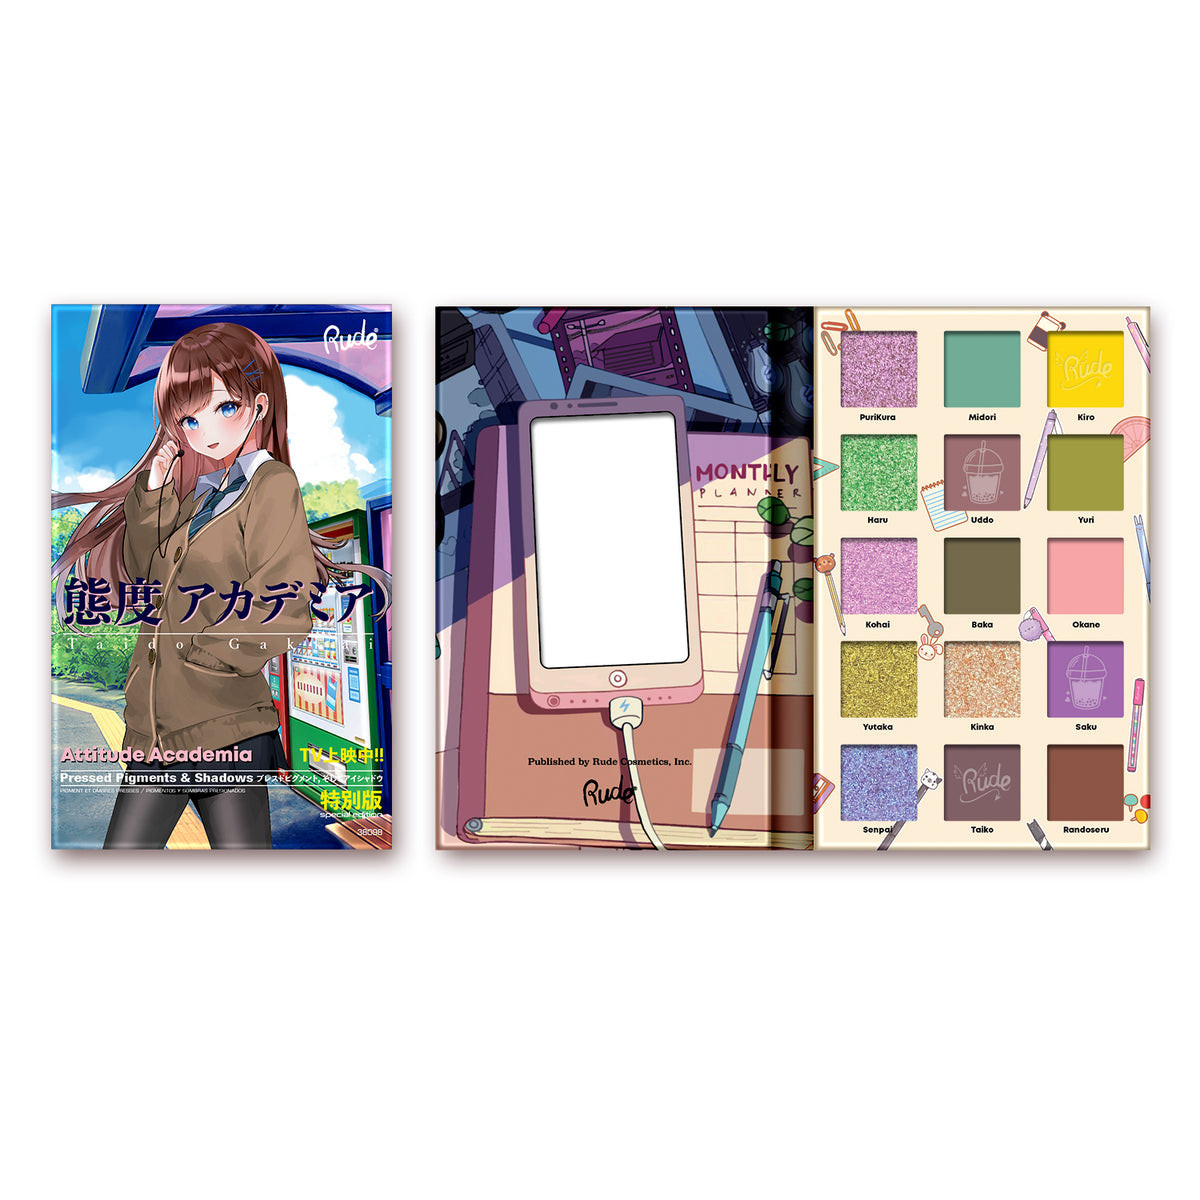 Manga Collection Pressed Pigments & Shadows Palette - Attitude Academia